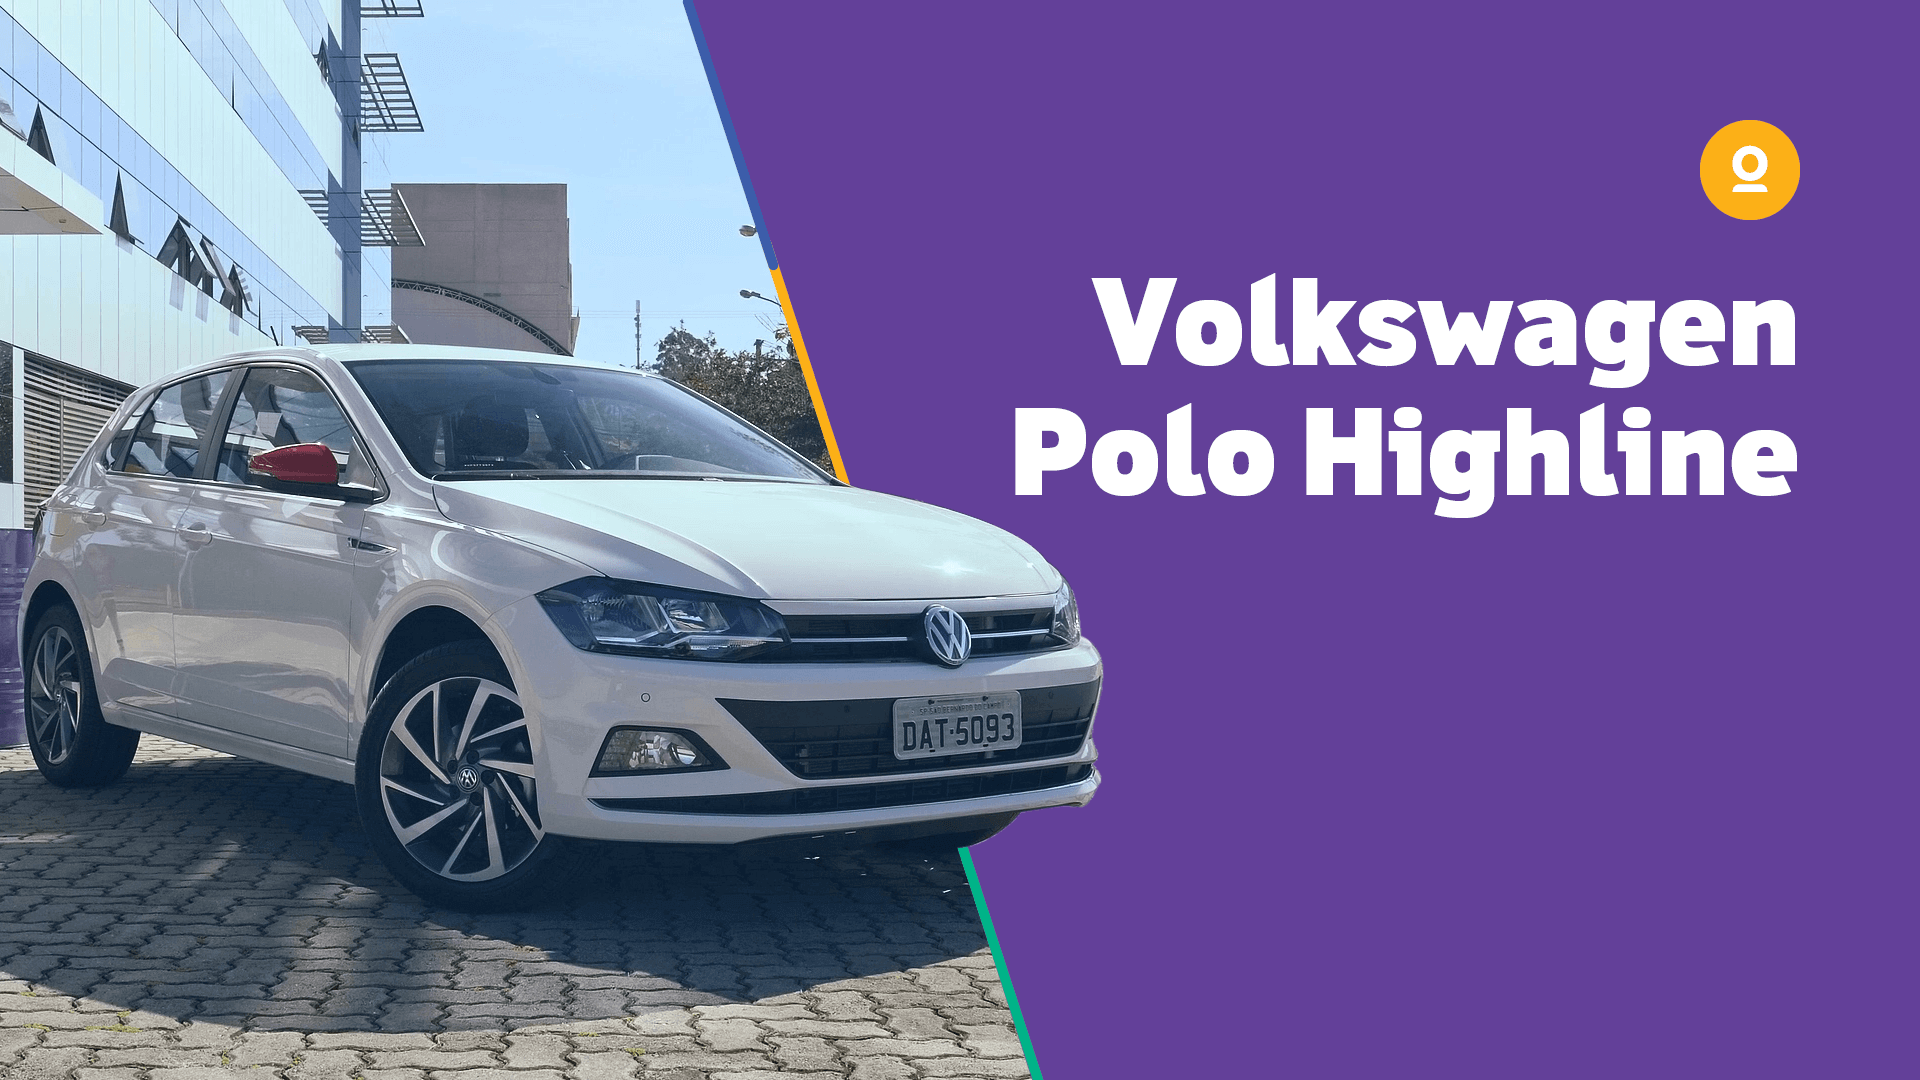 Quanto é o Seguro do novo Volkswagen Polo: confira o preço